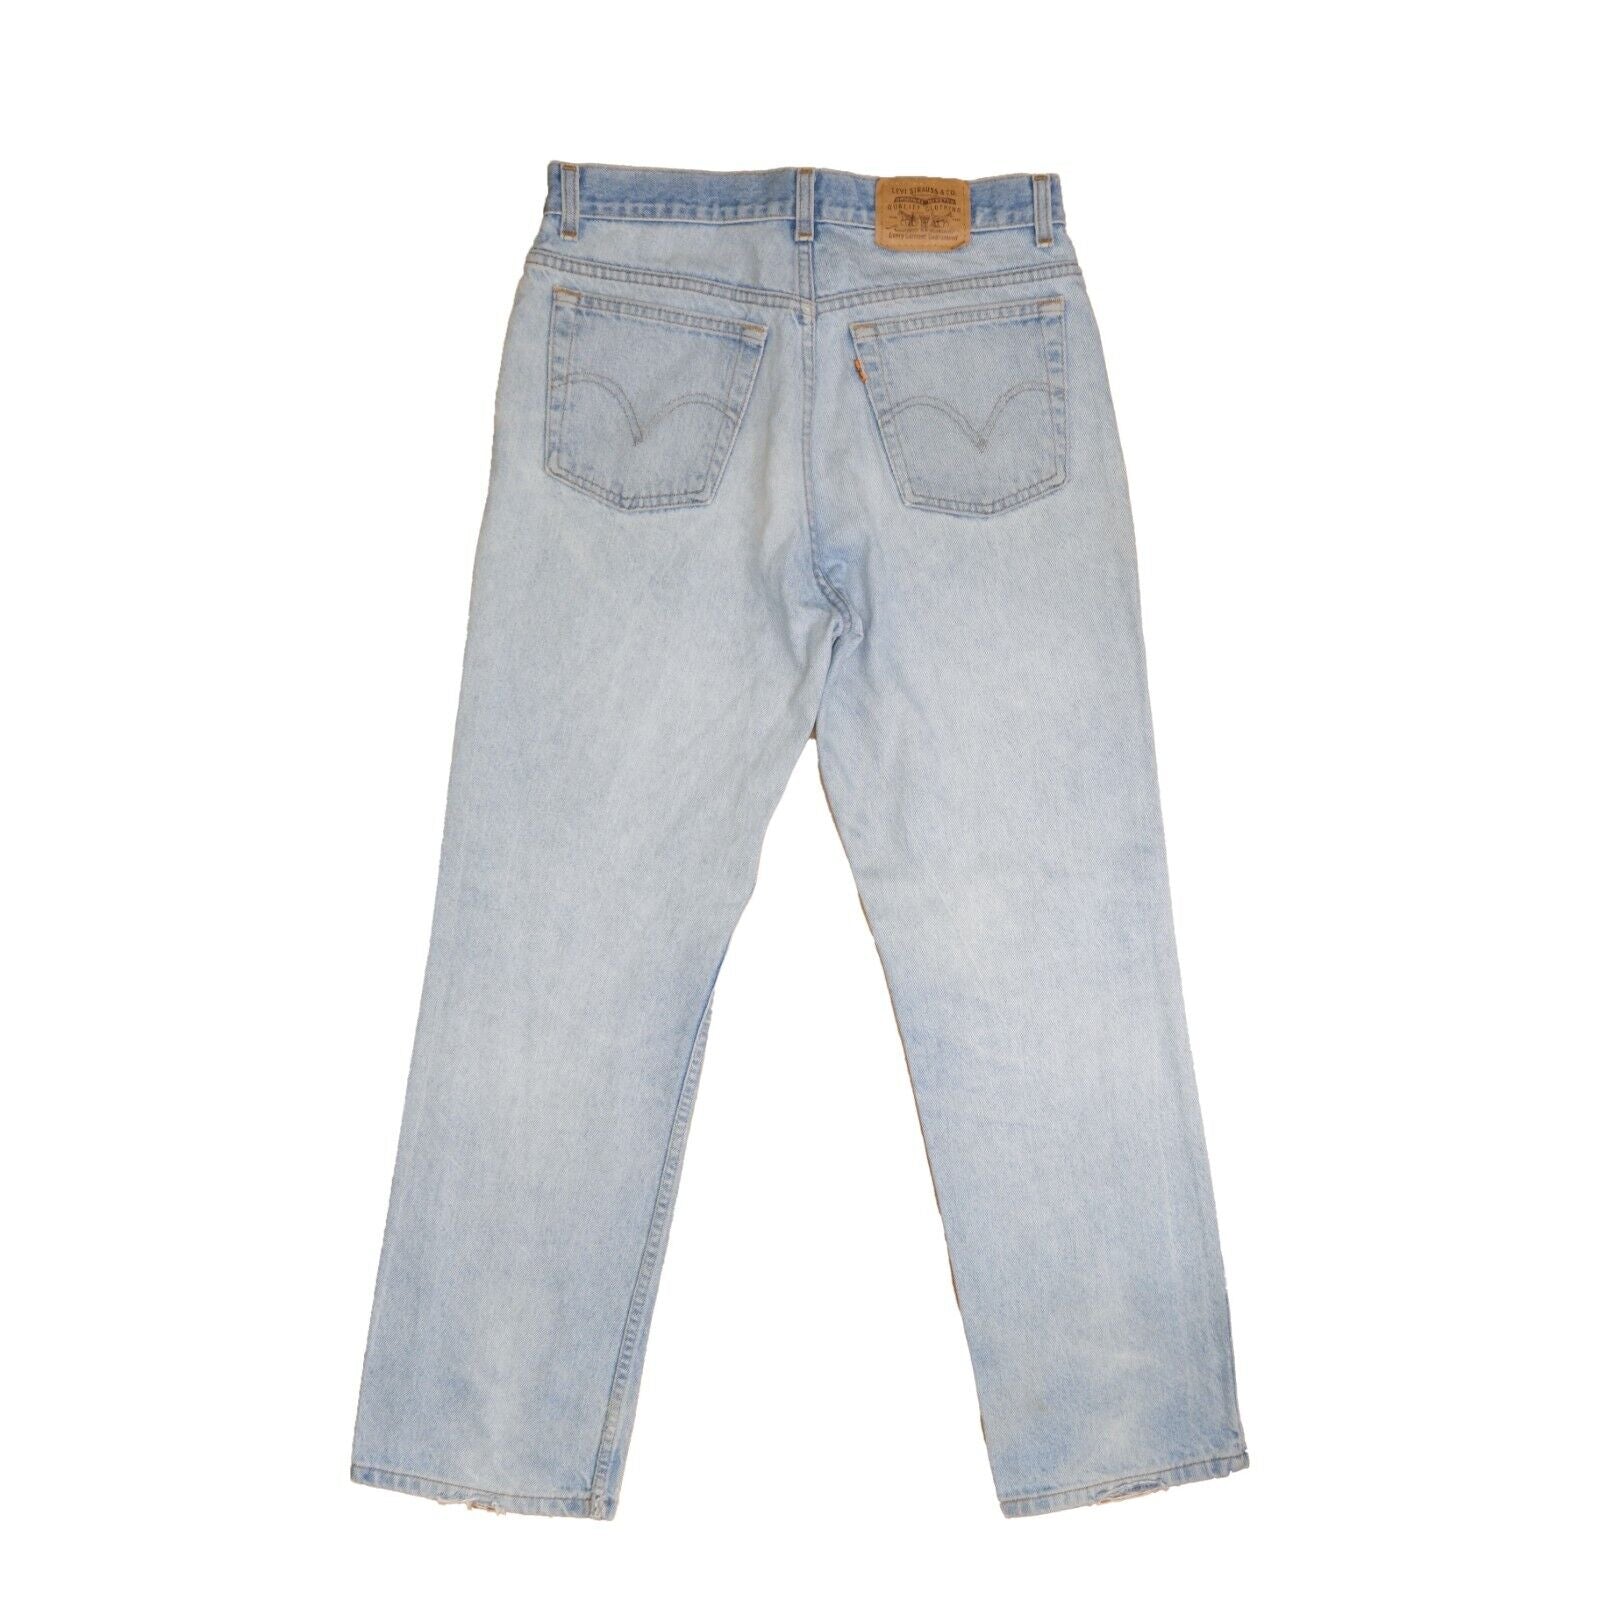 Vintage Levi Strauss & Co 505 Denim Jeans Size 32 X 30 Orange Tab